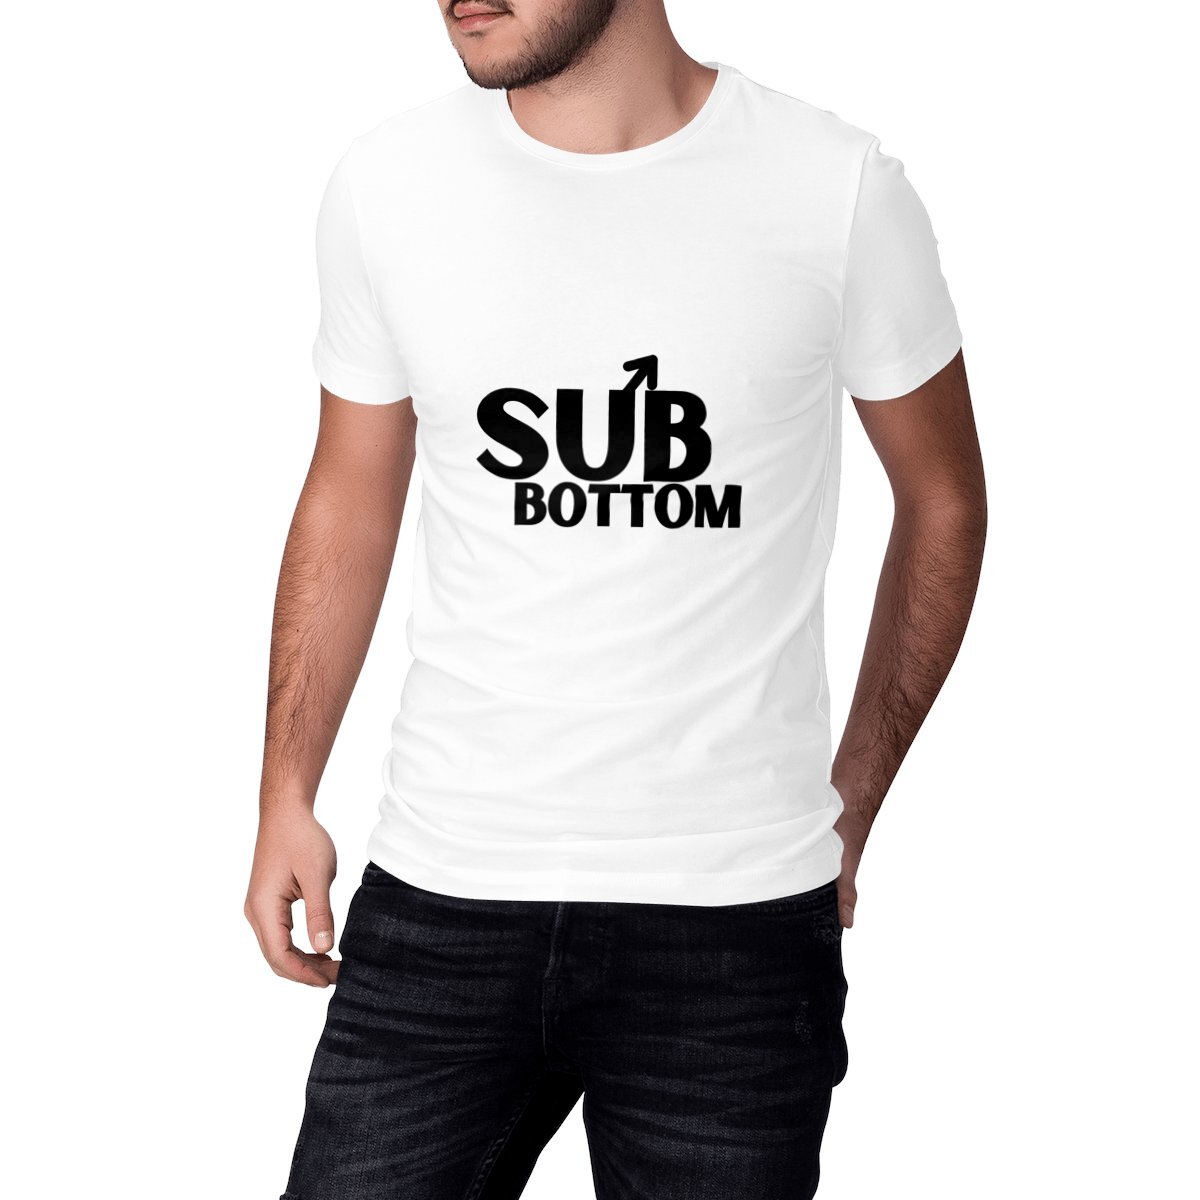 T-shirt "SUB BOTTOM"